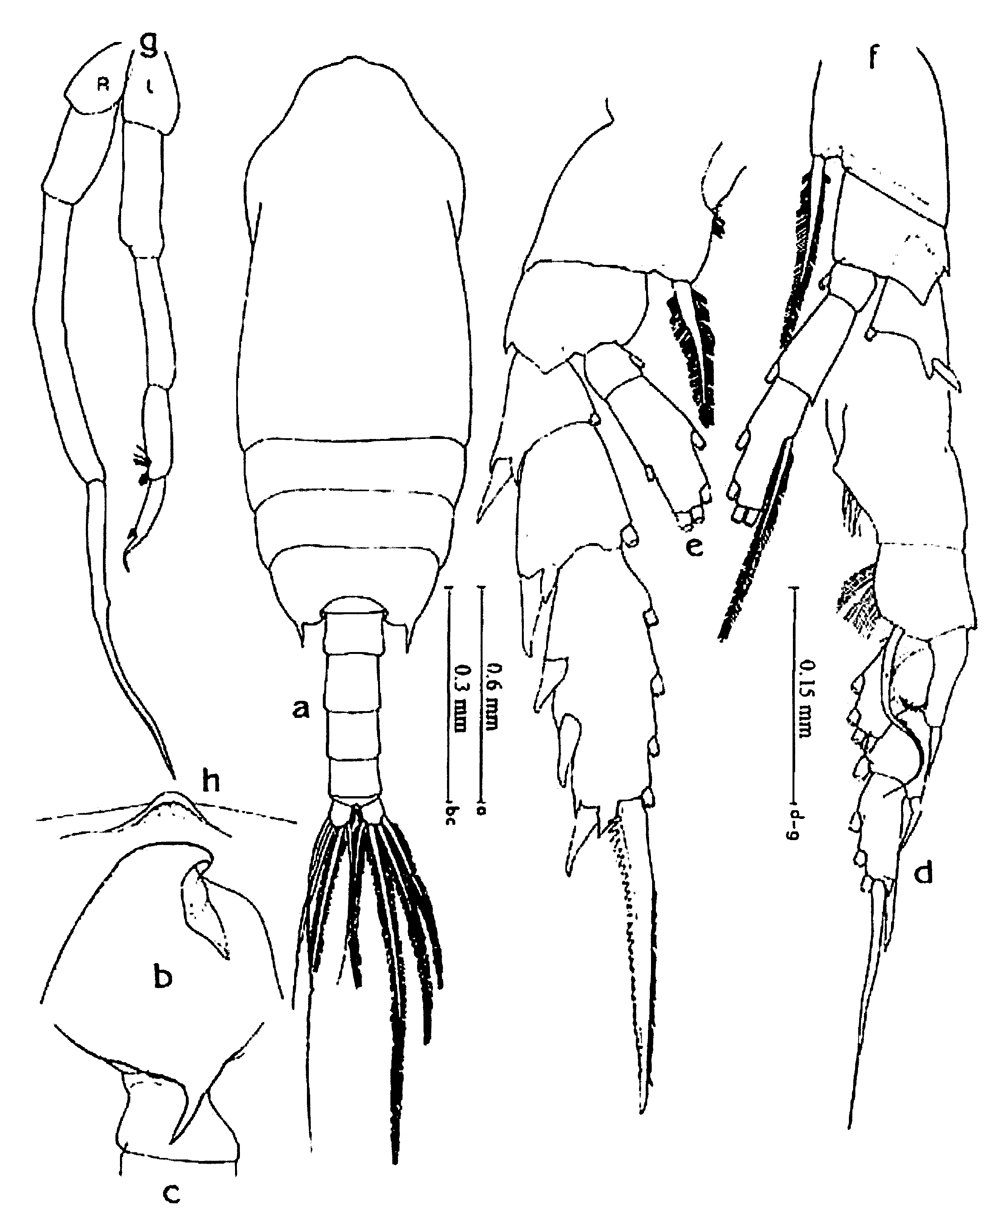 Species Chiridius gracilis - Plate 13 of morphological figures